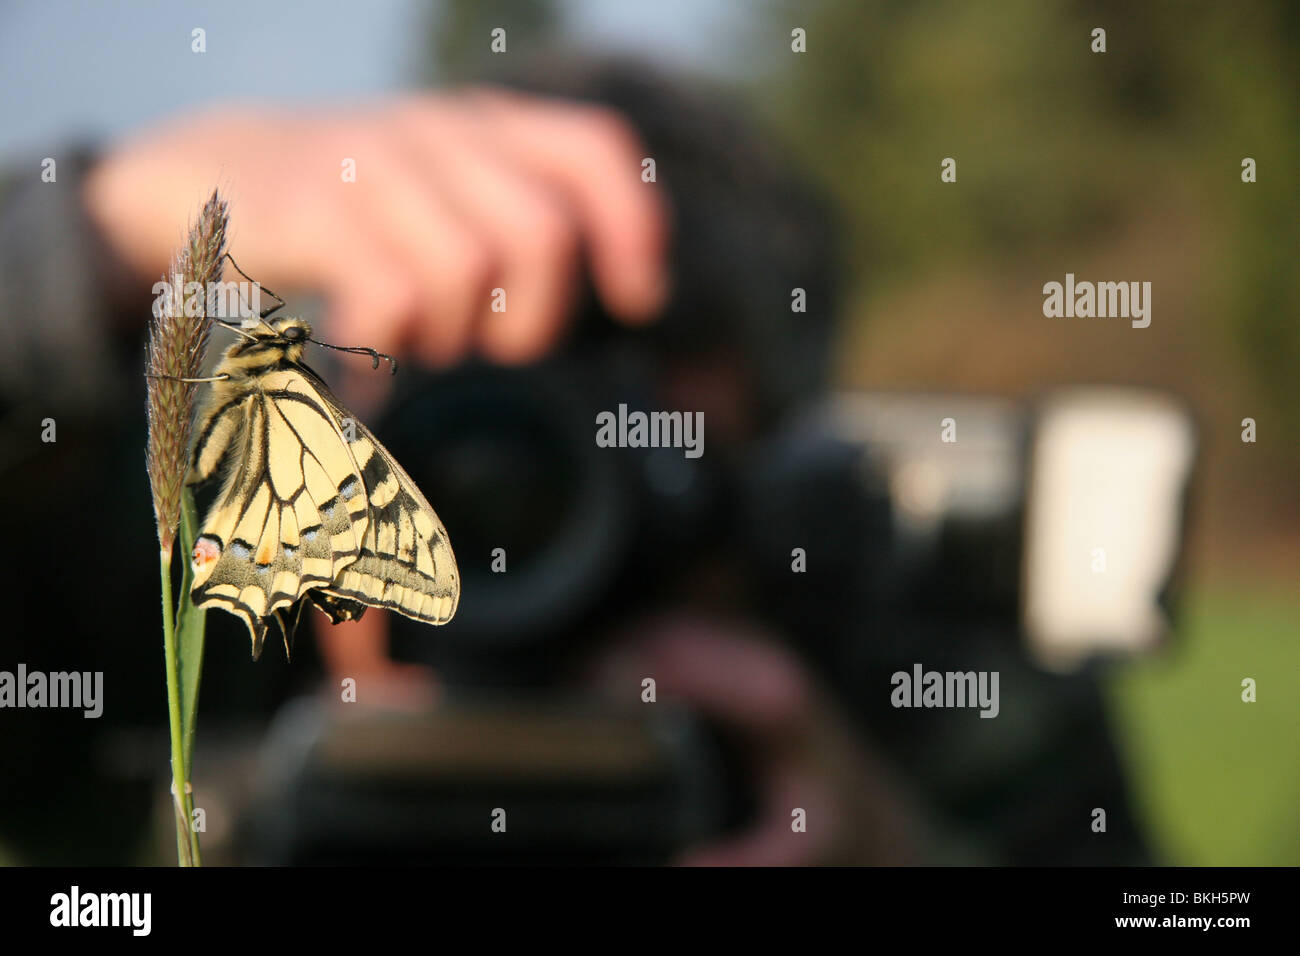 Koninginnepage; Swallowtail; Papilio machaon Stock Photo